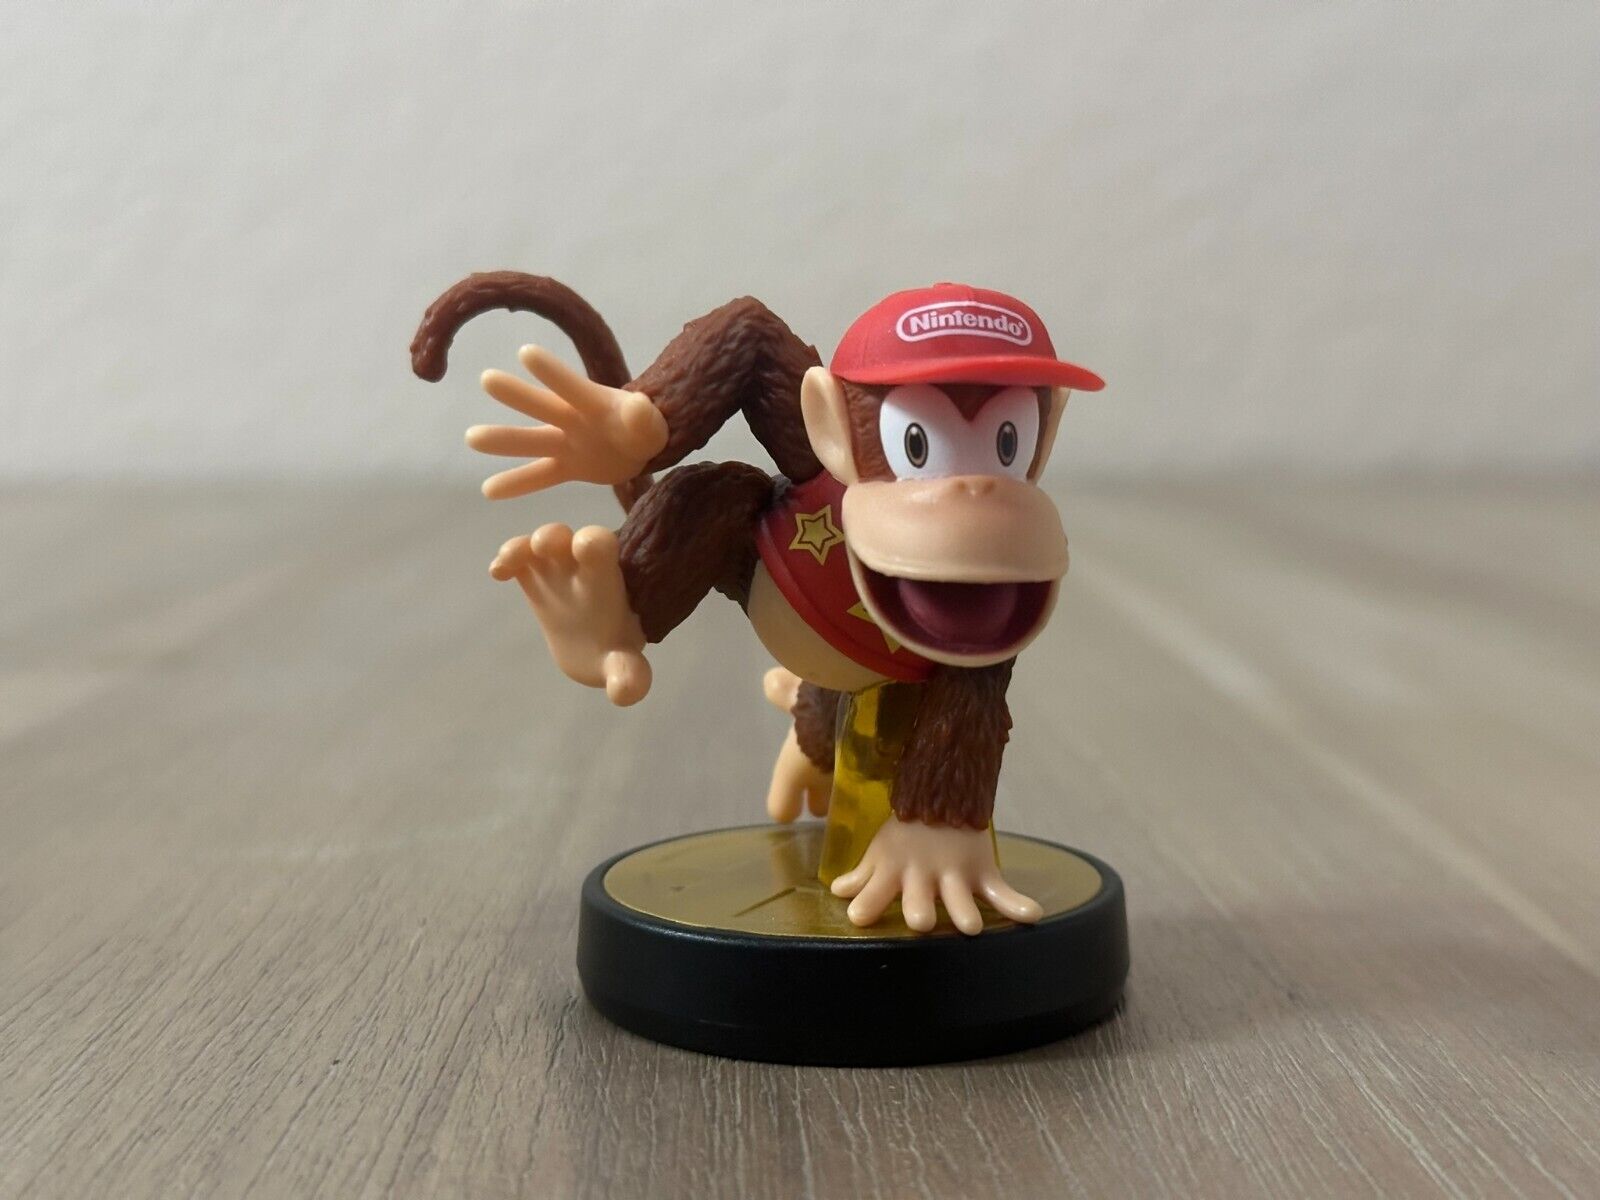 Nintendo Diddy Kong amiibo Super Smash Bros Series Figure - Loose, no box